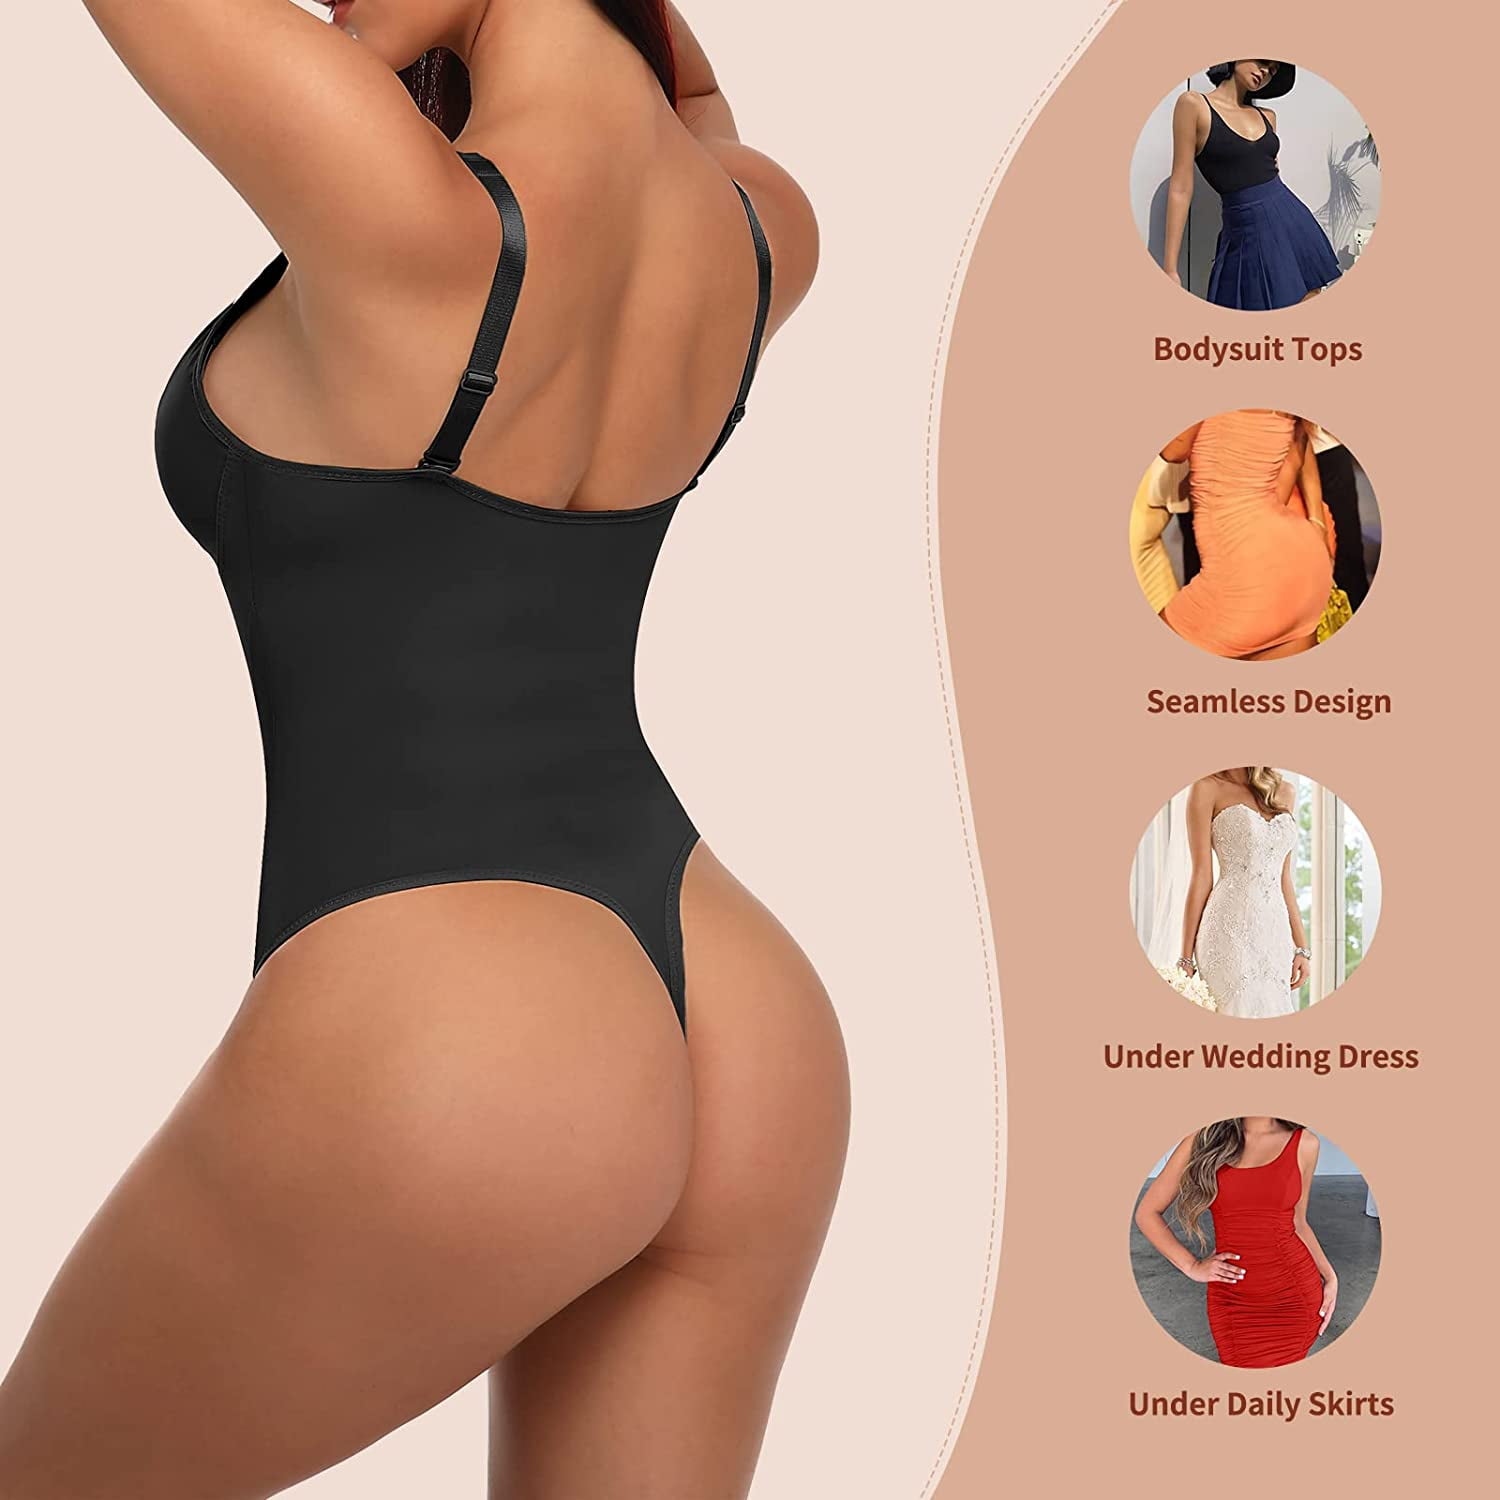 Vaslanda Women Thong Shapewear Bodysuit Tops with Built-in Bra Pads Smooth  Tummy Control Body Shaper 